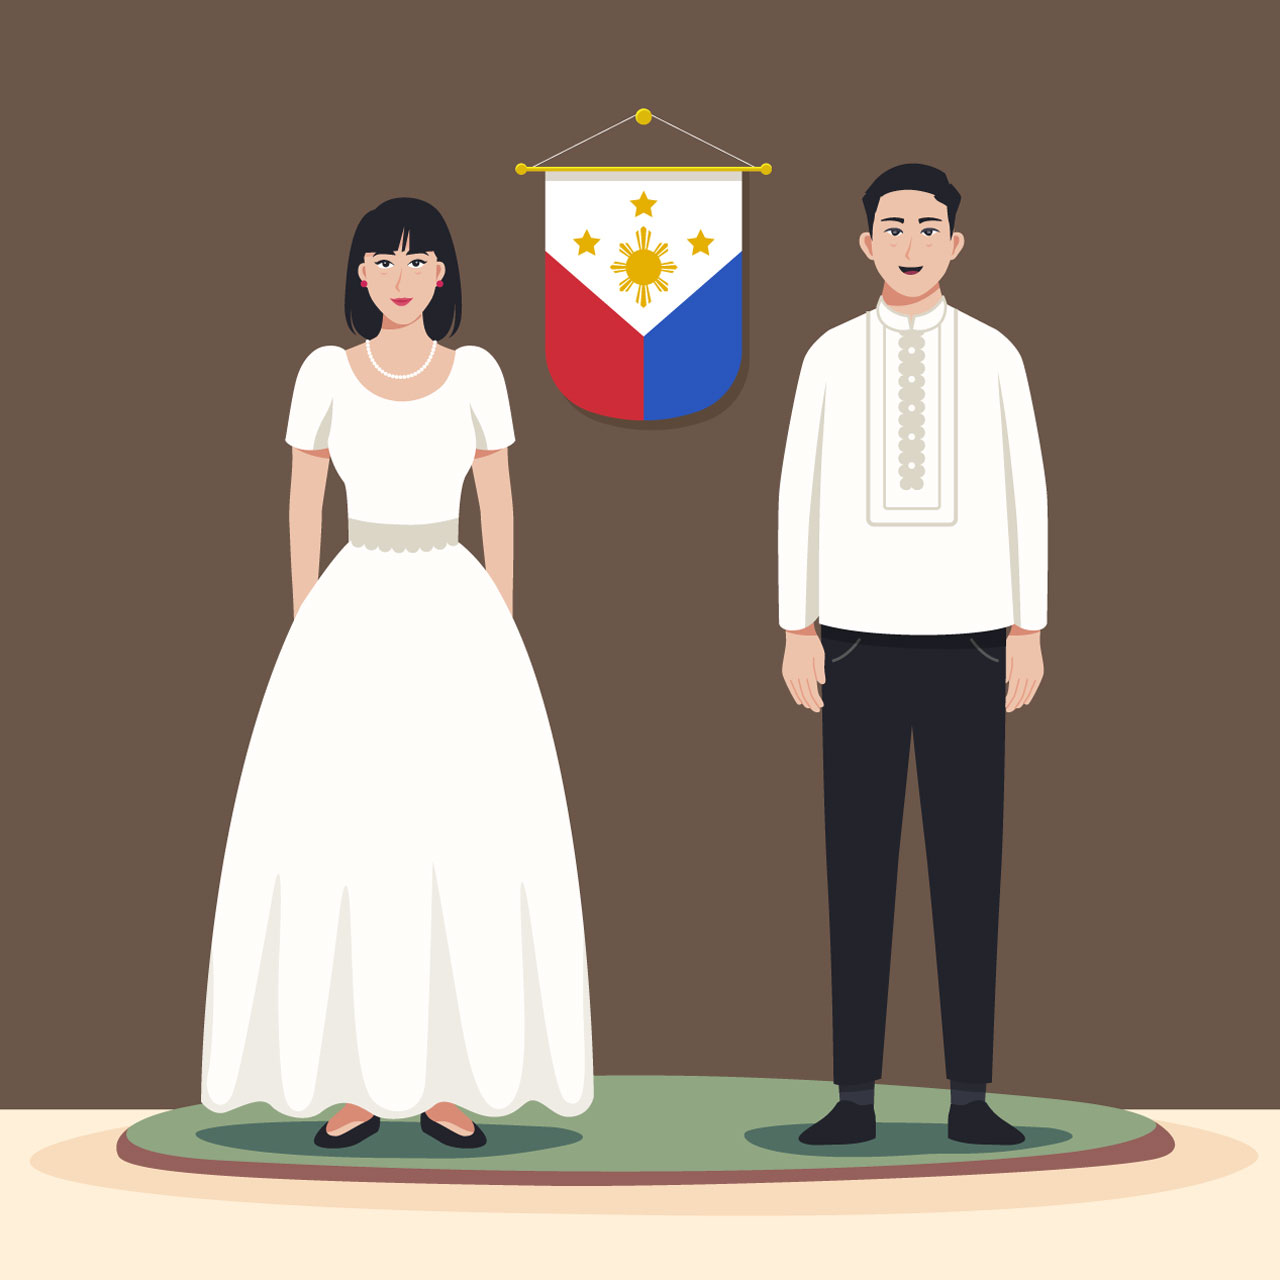 Flat design philippine wedding with flag cartoon illustration image